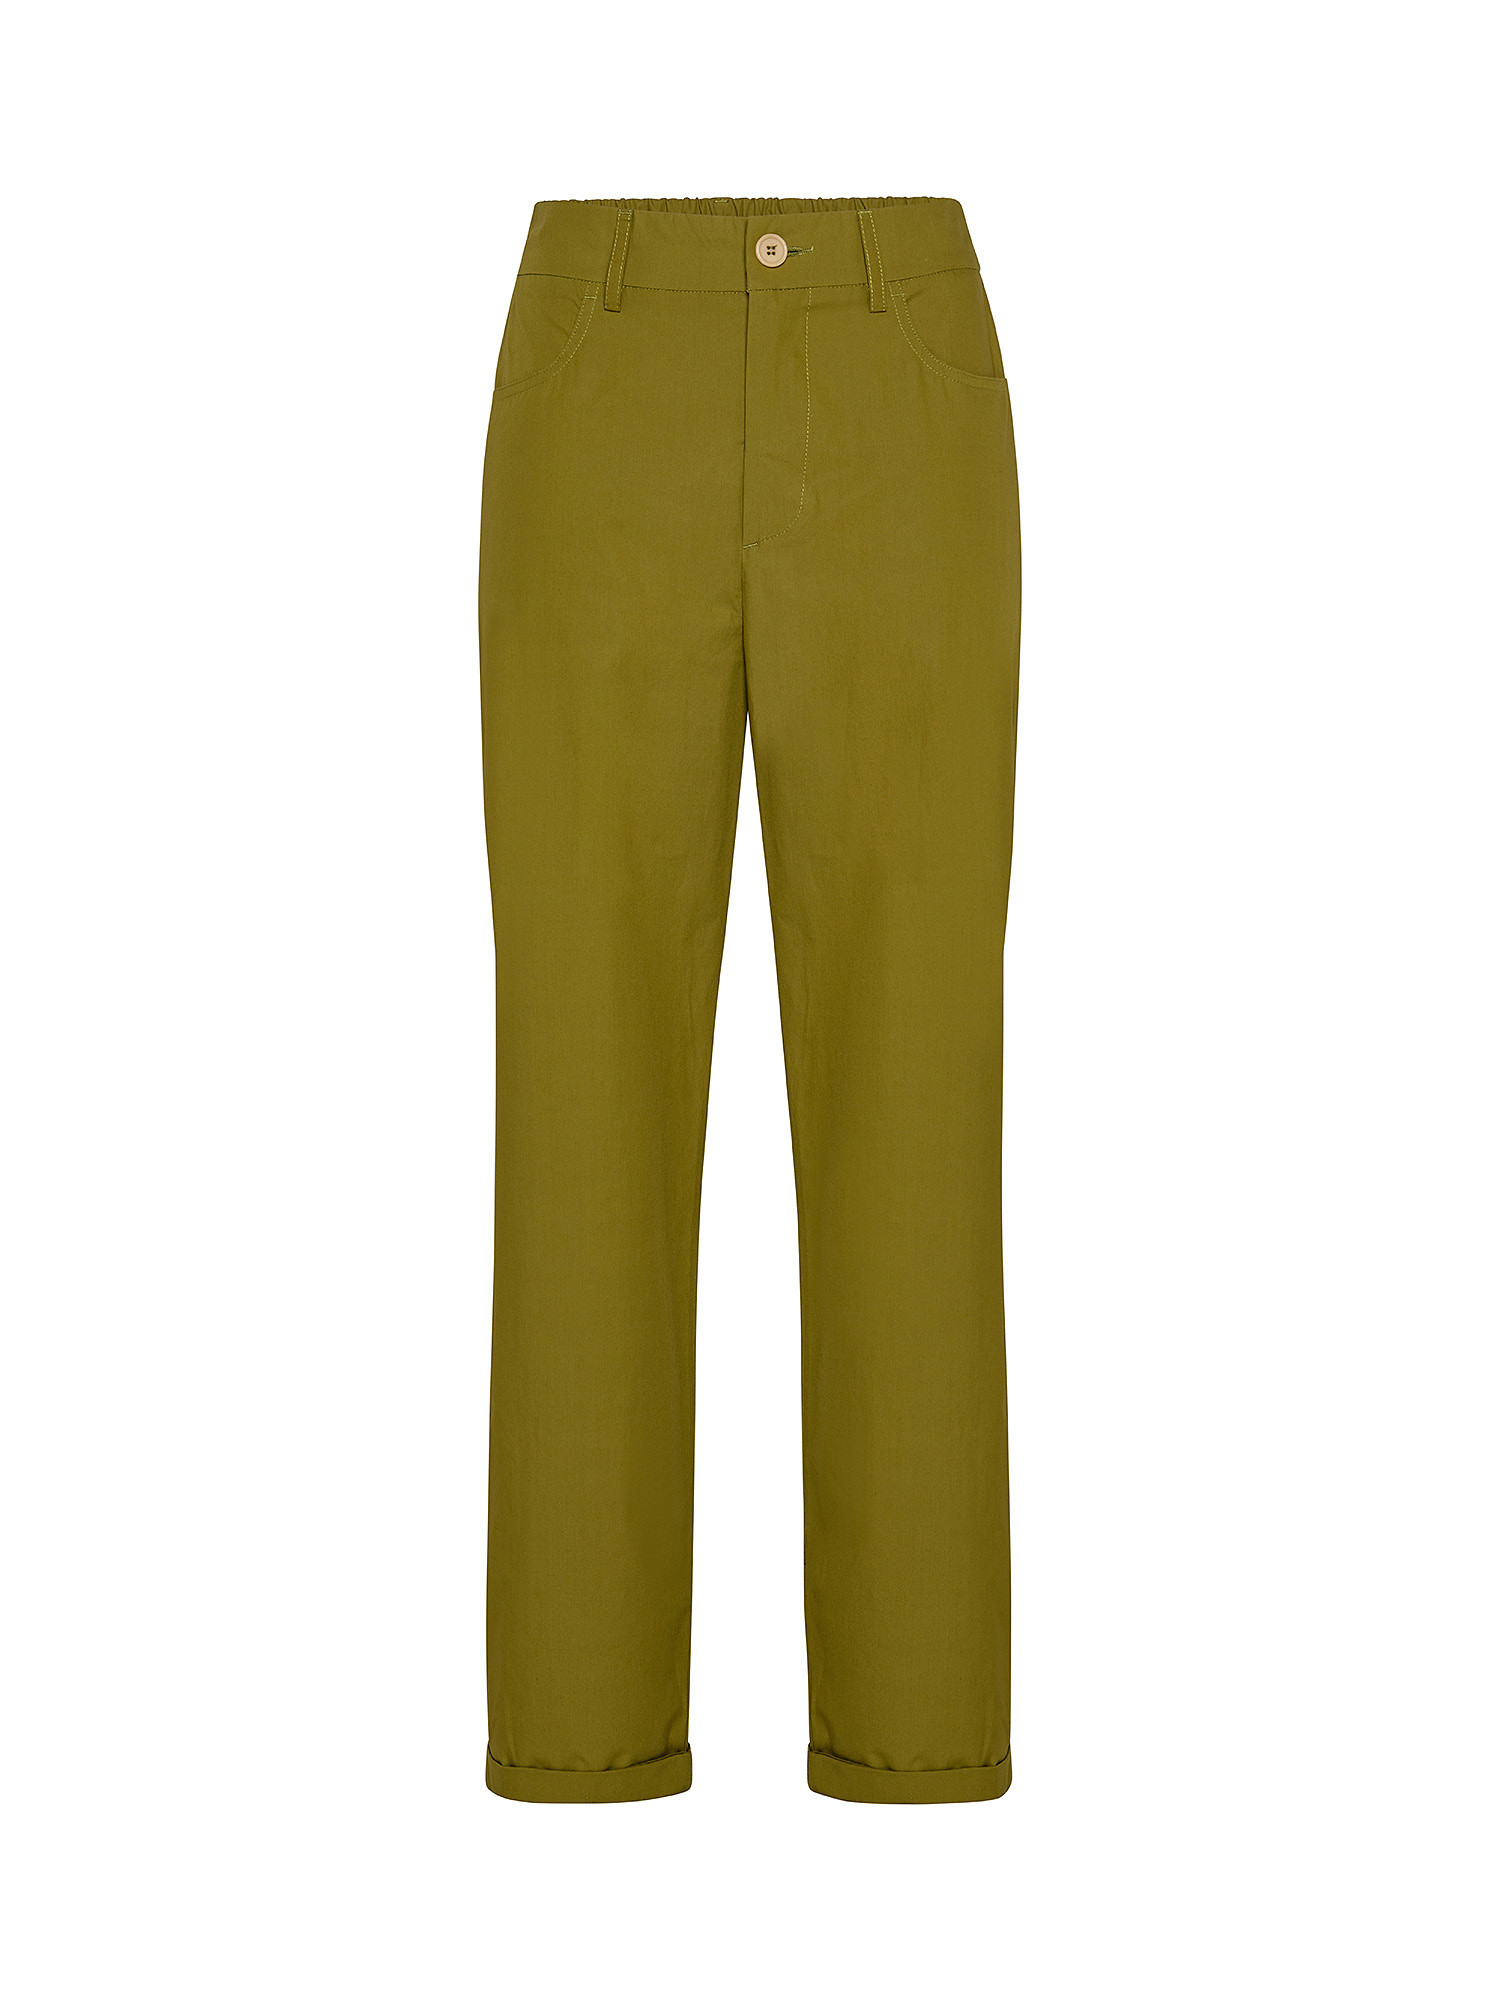 Pantaloni Delaware in popeline di cotone, Verde, large image number 0